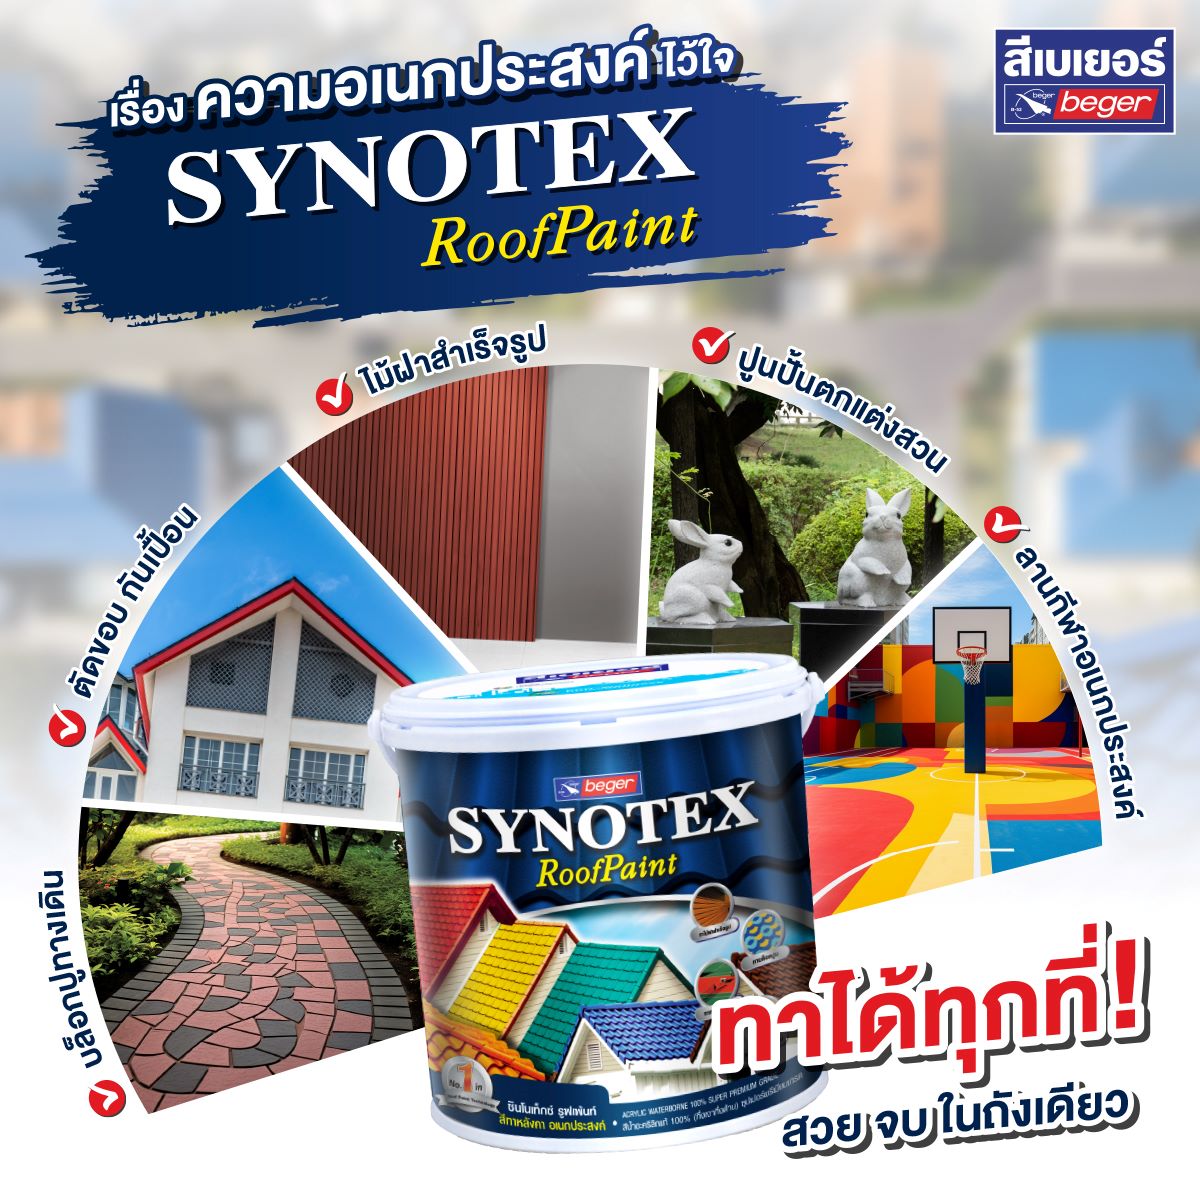 Synotex roof paint ทาได้หลายพื้นที่